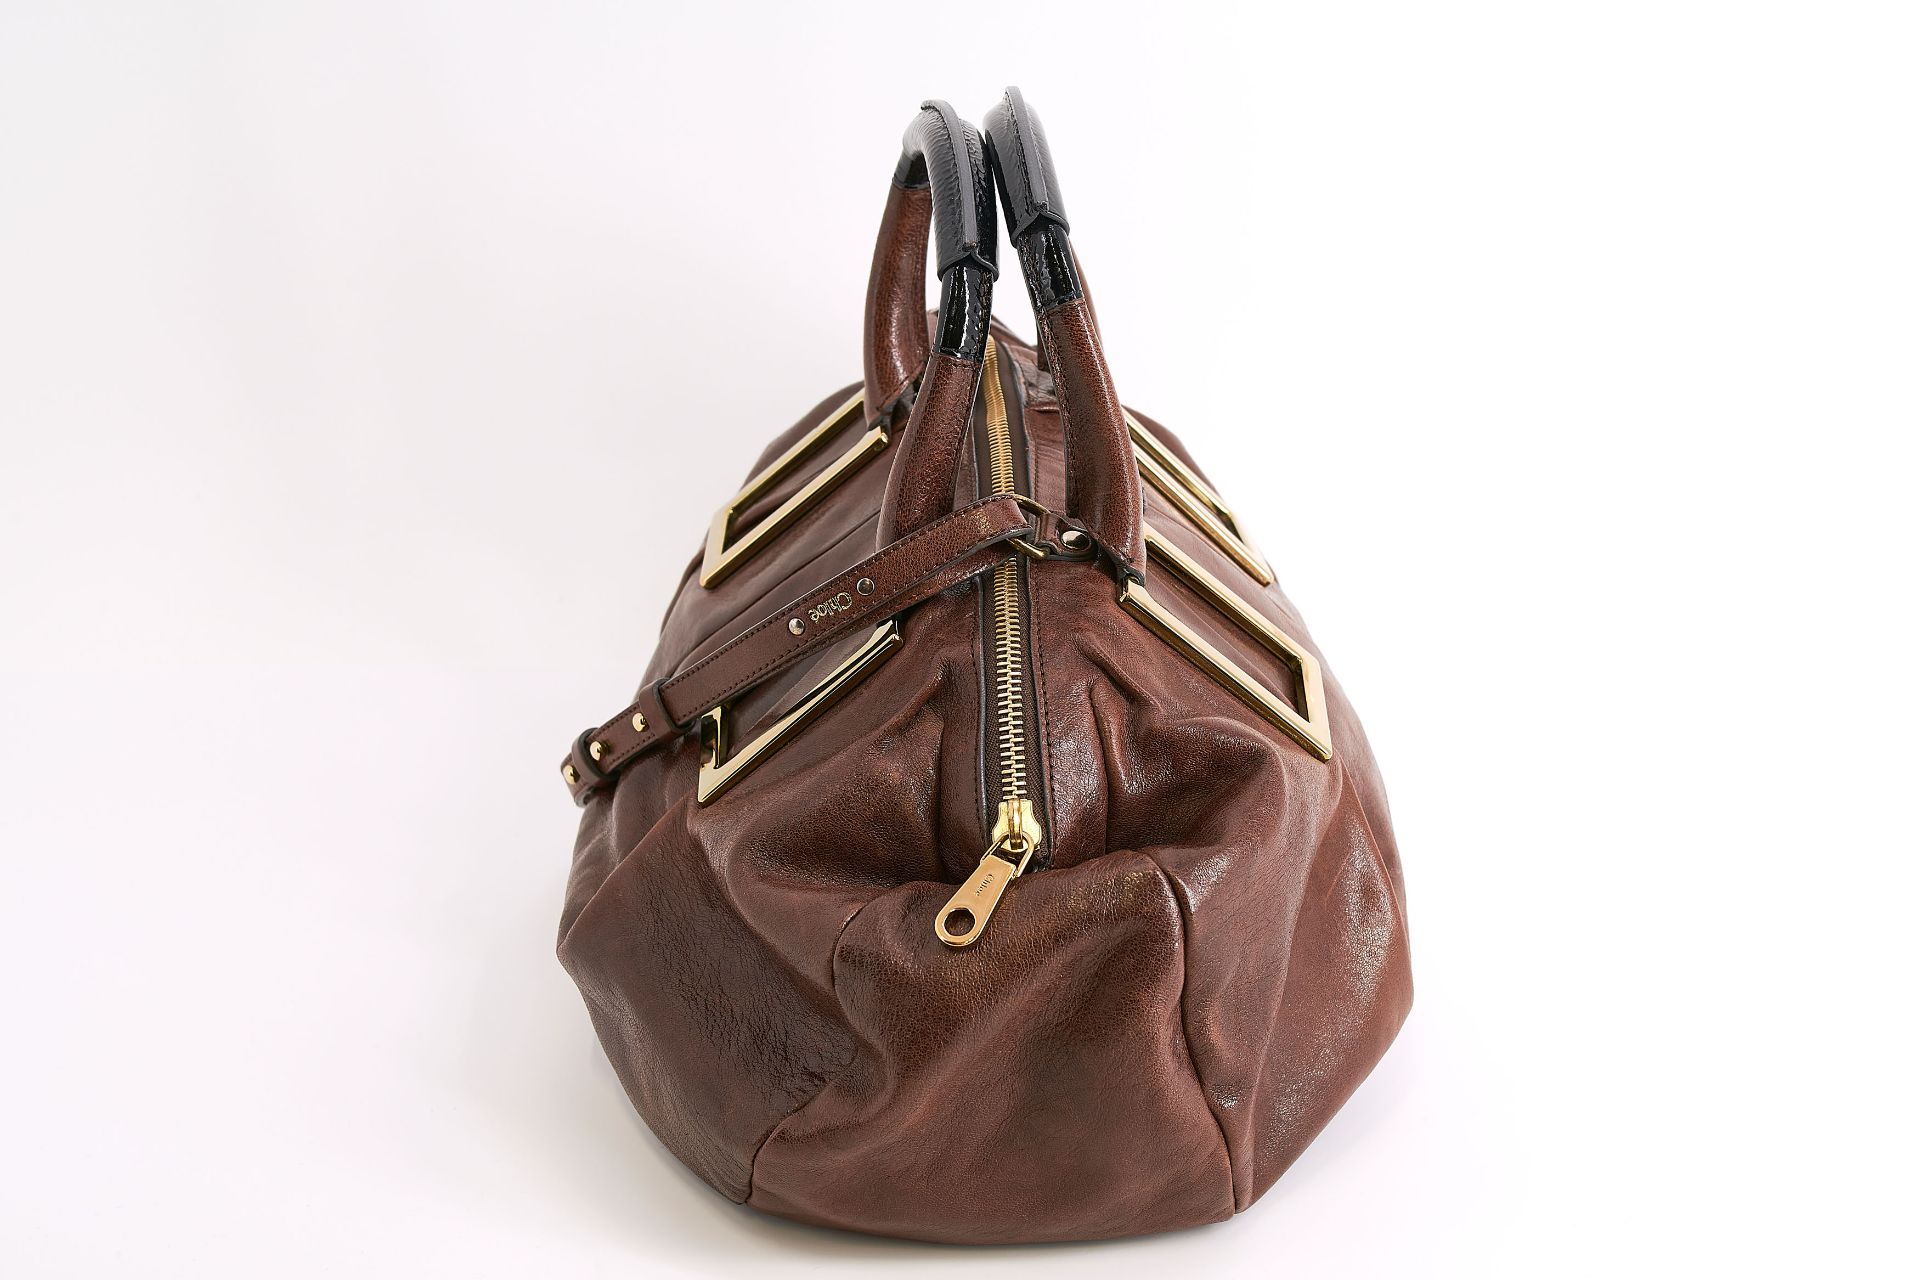 Chloé: Handbag 'Ethel' - Image 2 of 5